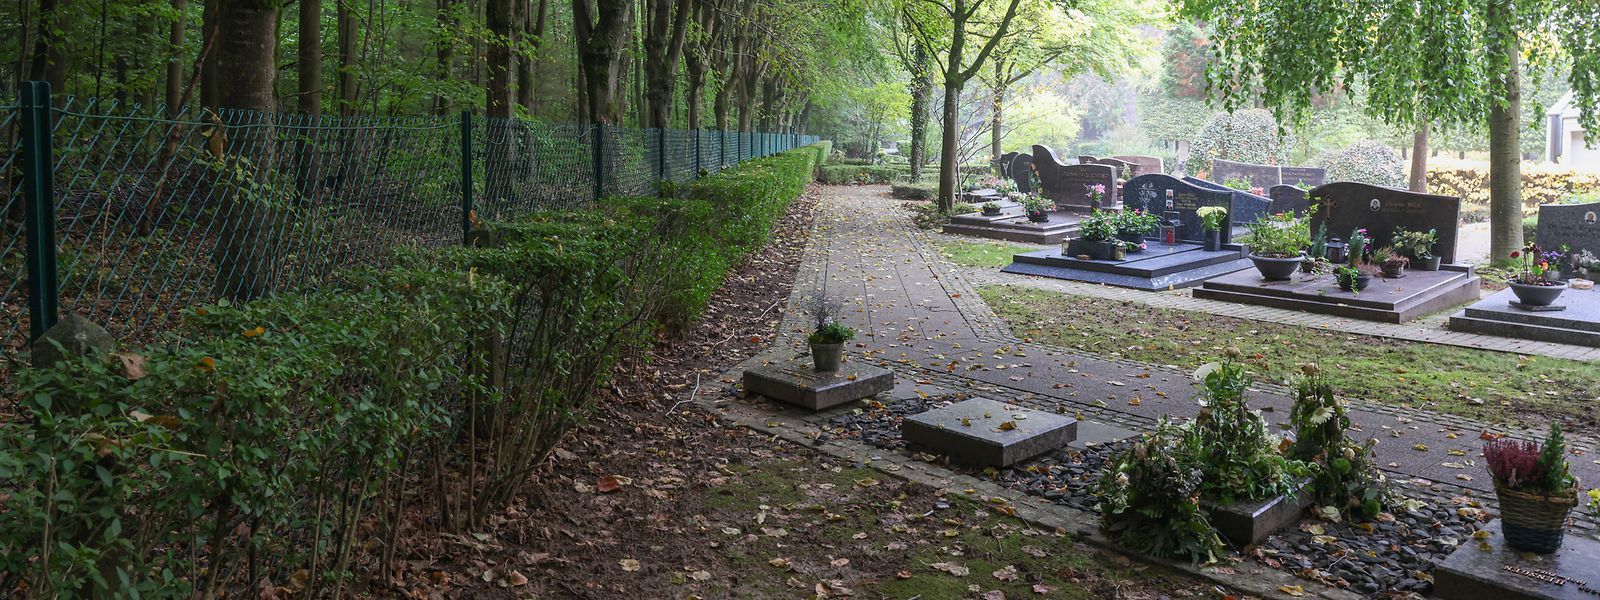 Der Waldfriedhof kommt in die Nähe des "normalen" Friedhofs in Howald.